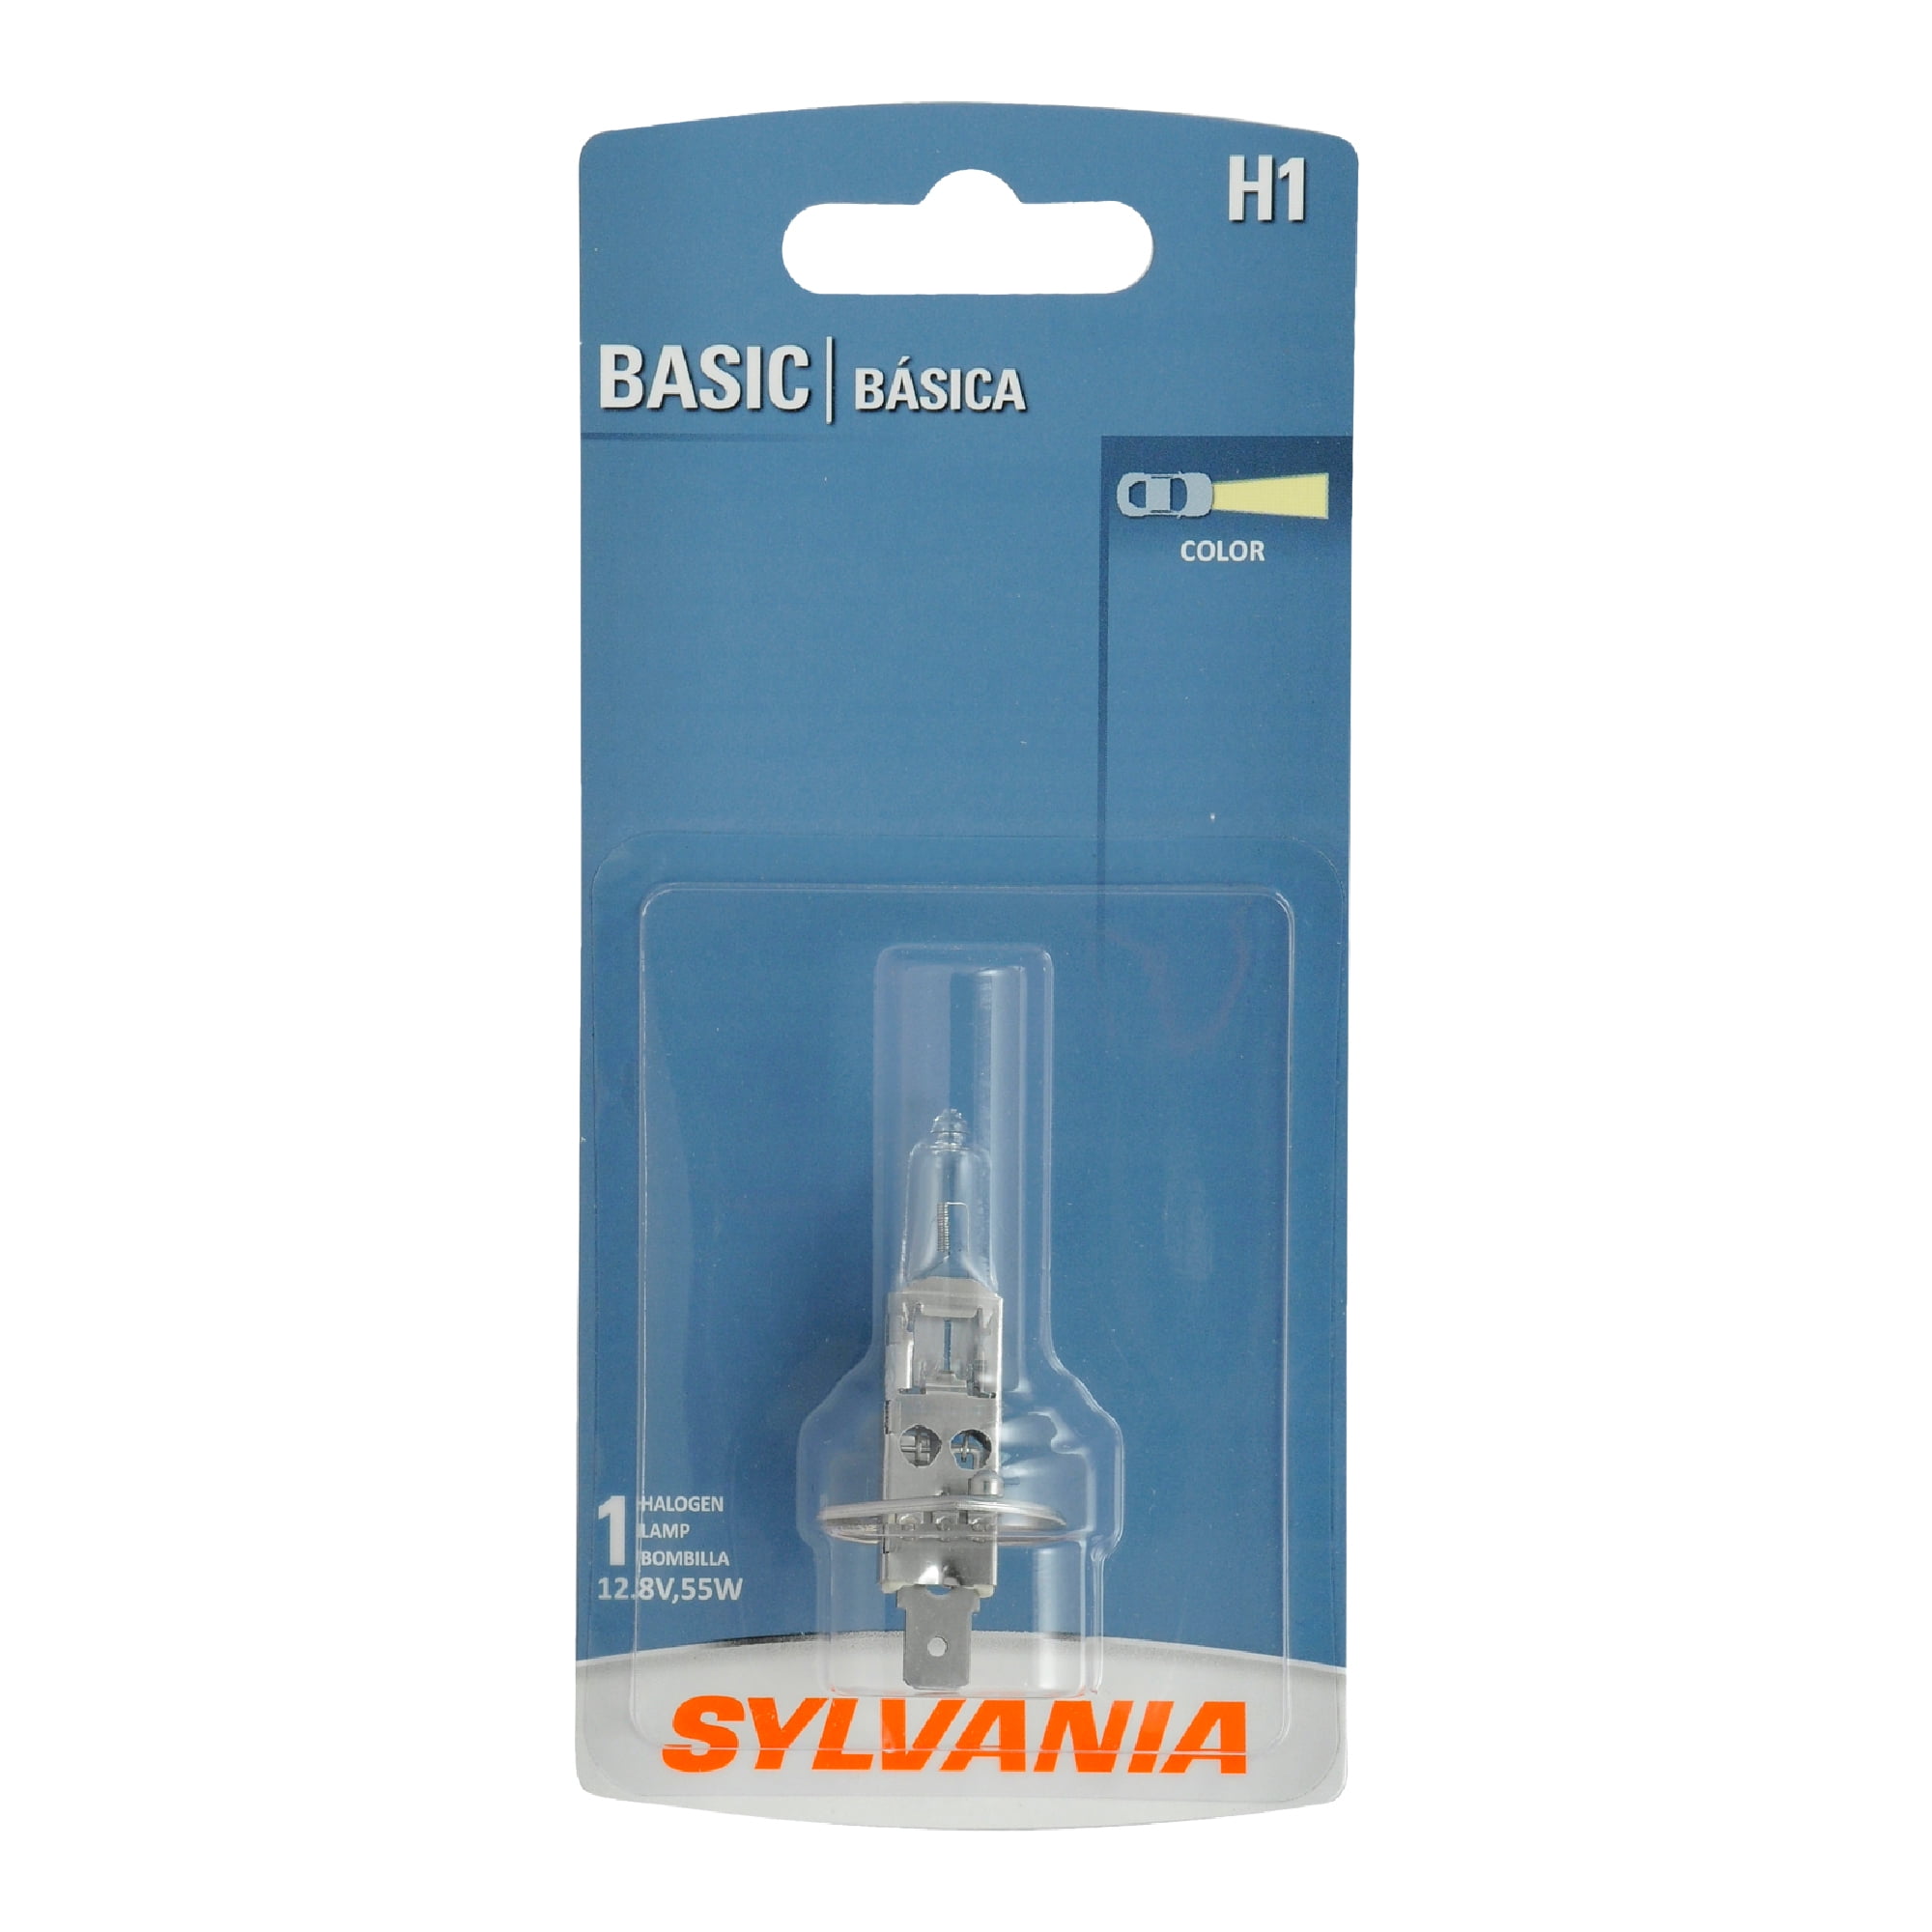 Sylvania H1 - 55 Watt Basic Auto Halogen Headlight Bulb, Pack of 1.